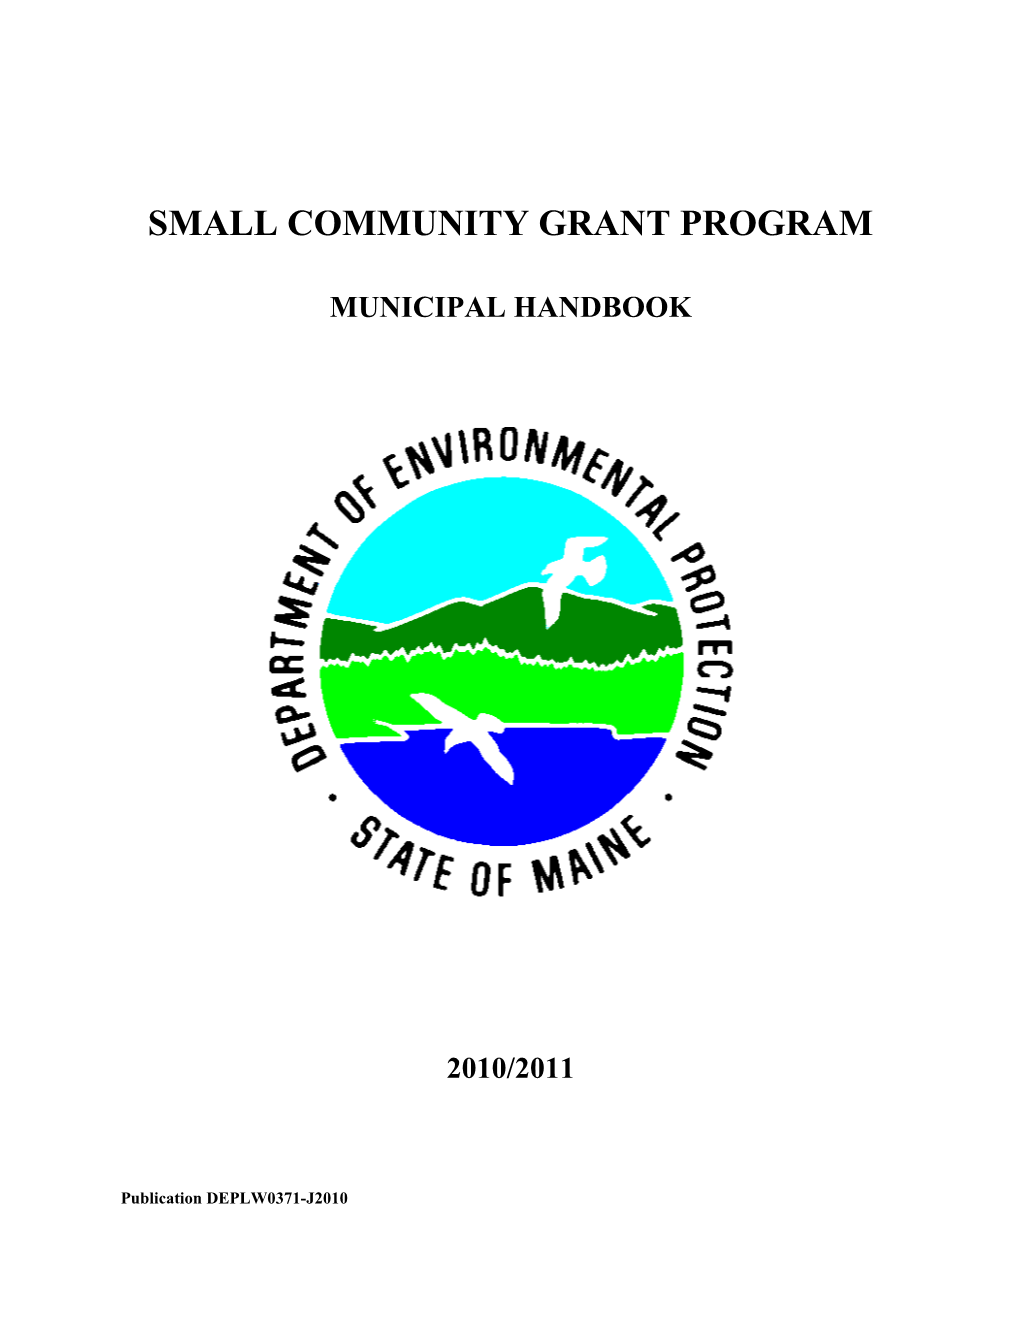 Small Community Grant Program